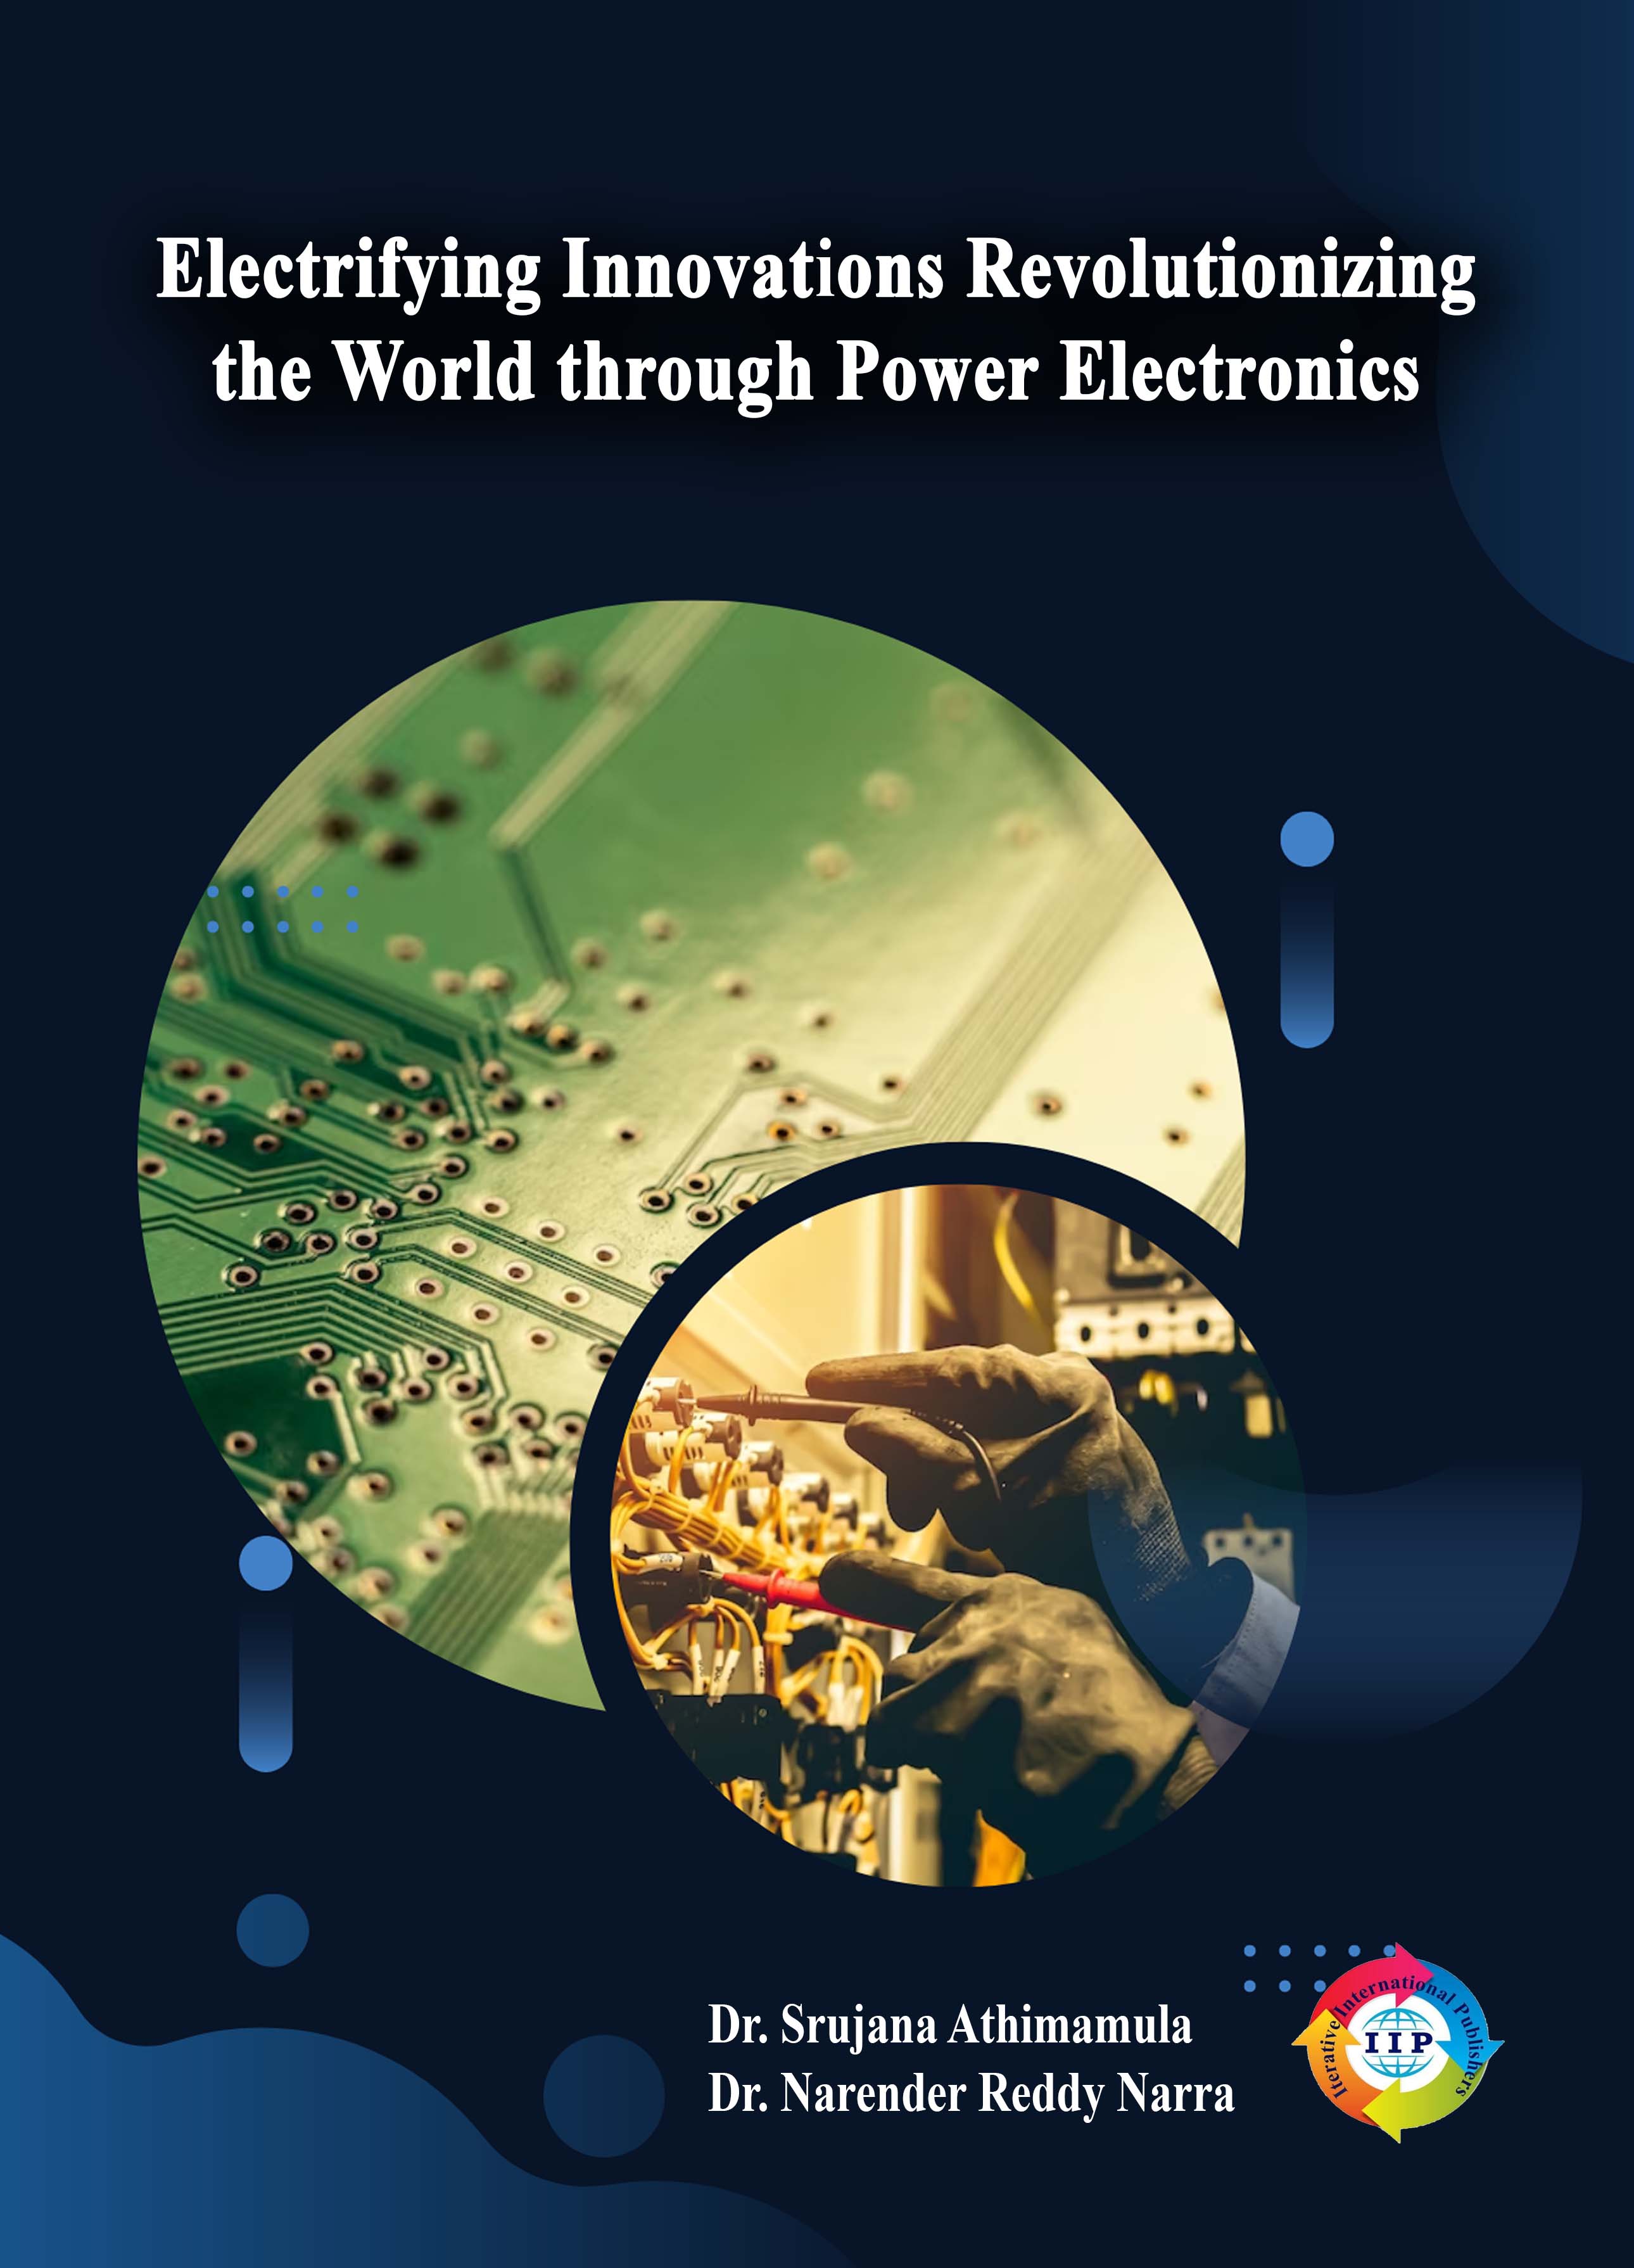 ELECTRIFYING INNOVATIONS REVOLUTIONIZING THE WORLD THROUGH POWER ELECTRONICS